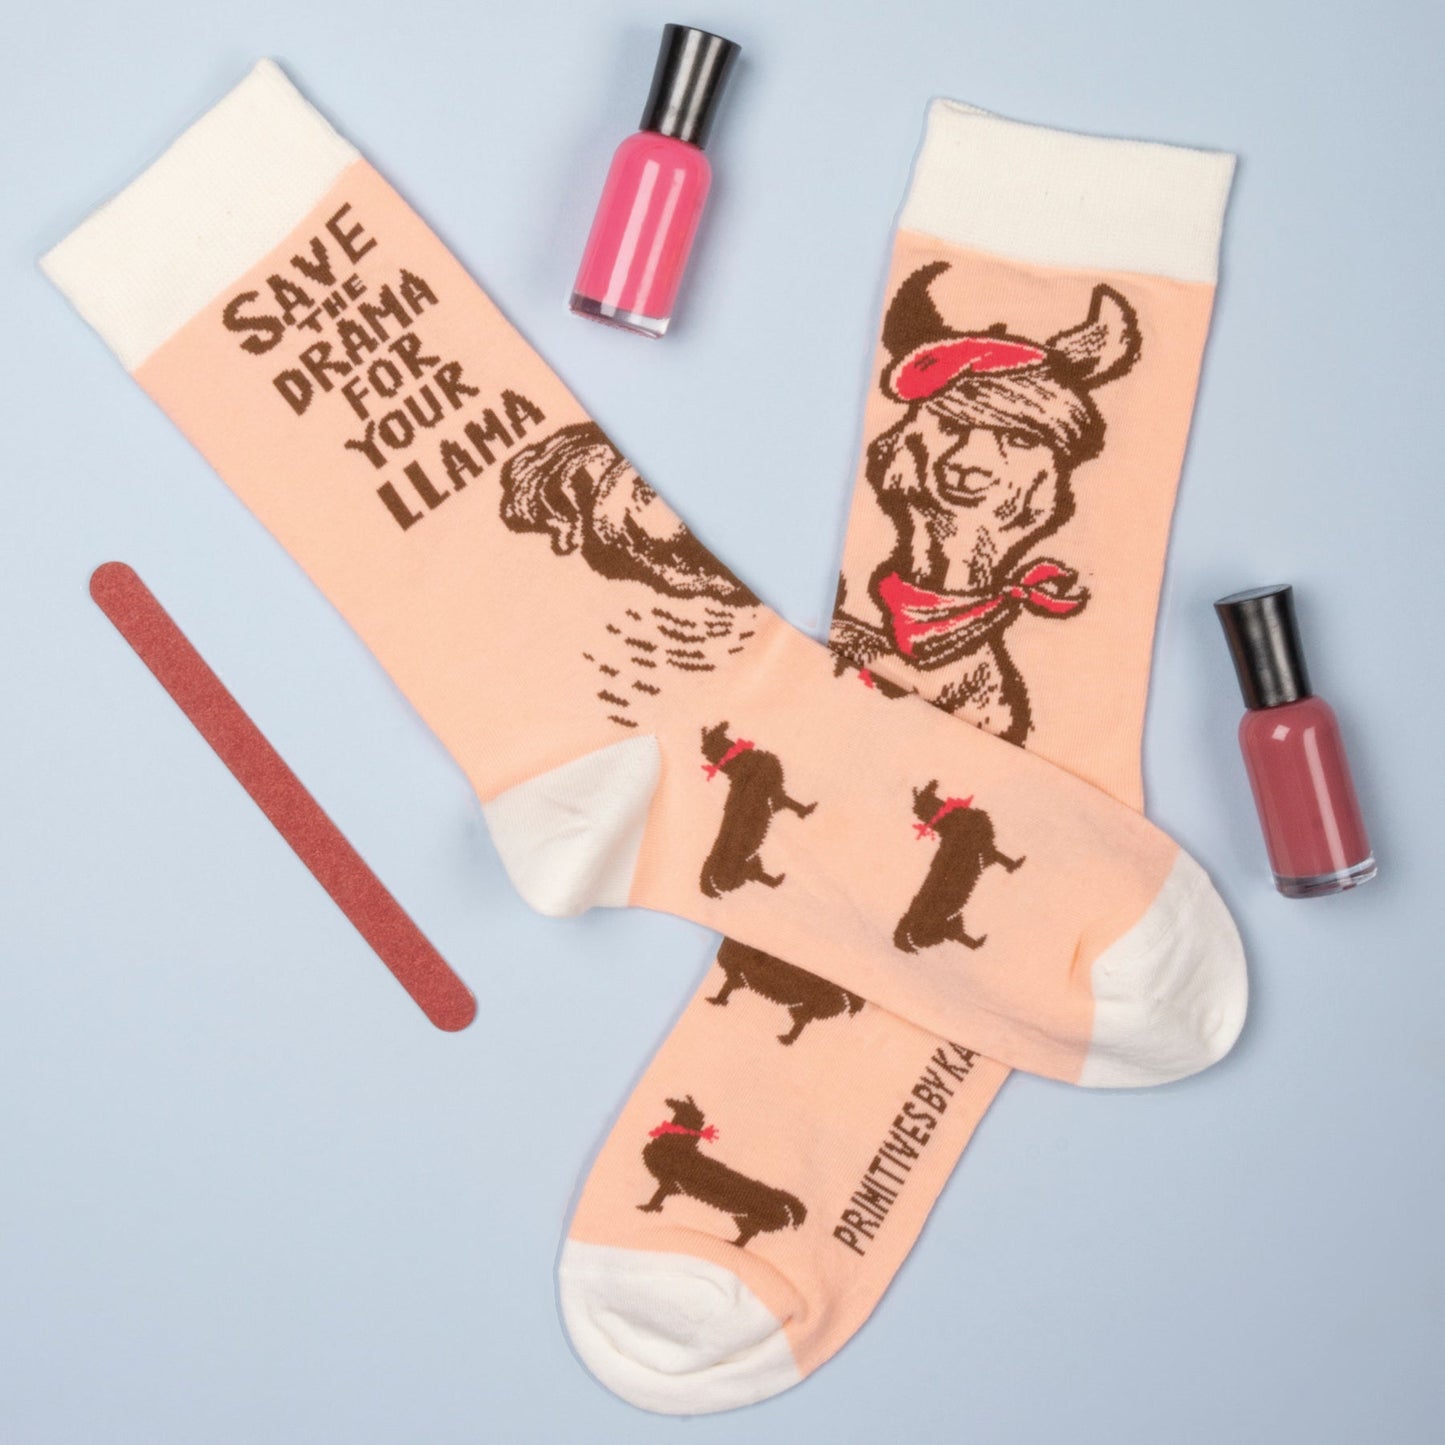 3 Pack Animal Lovers Socks | Funny Novelty Socks with Cool Design